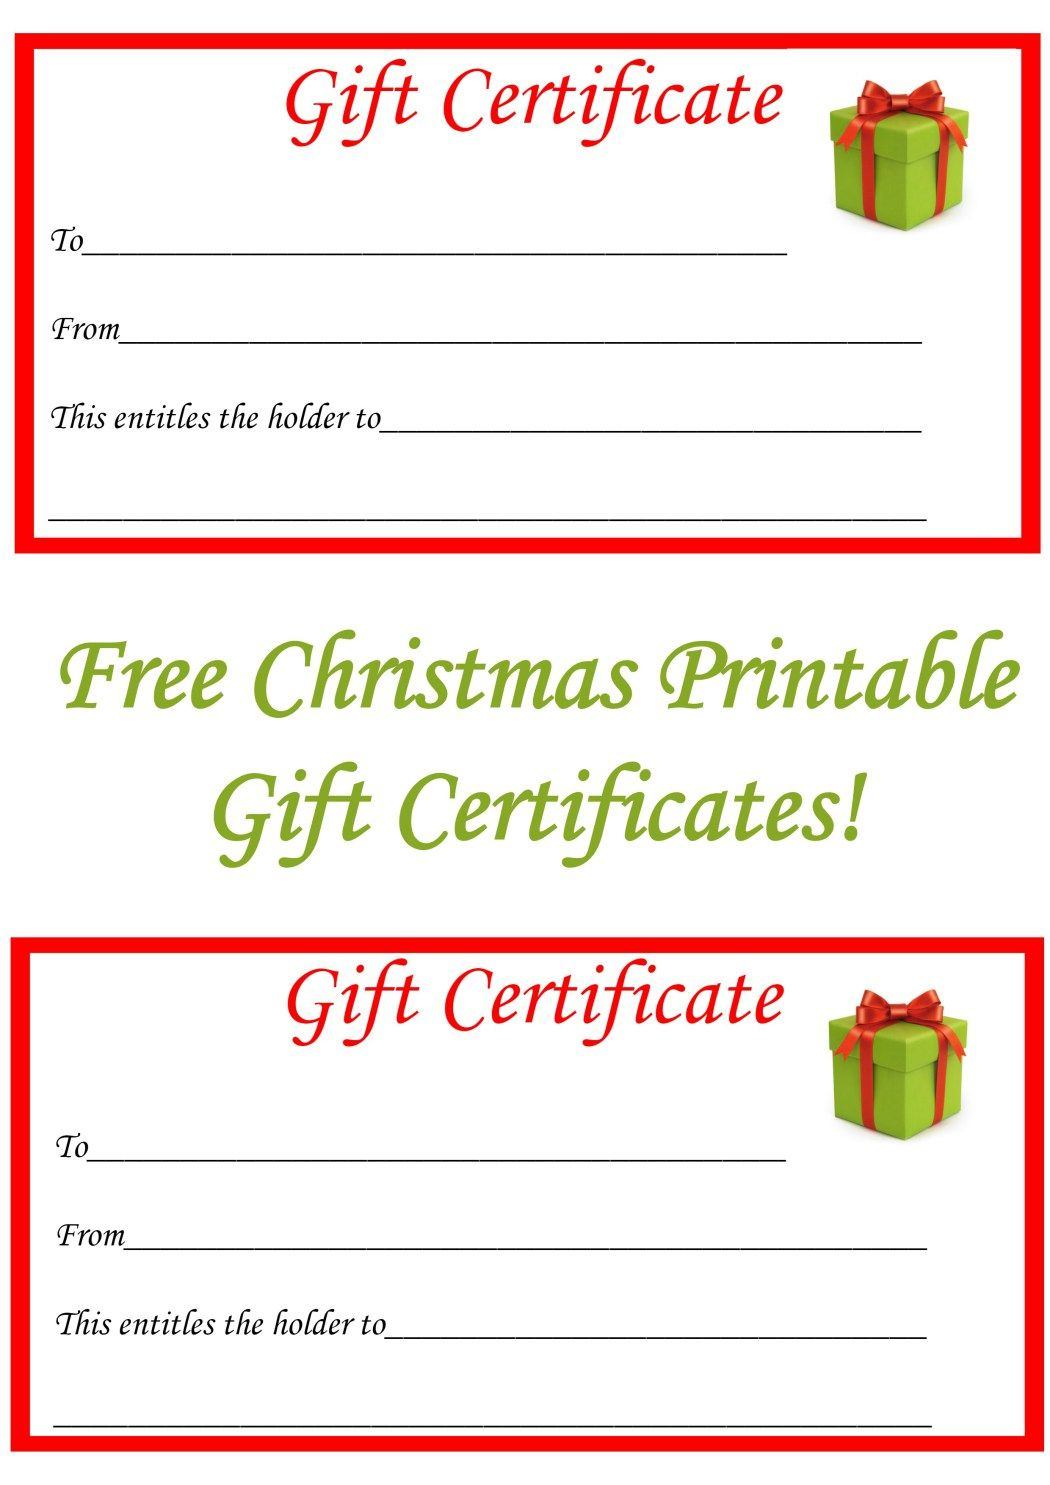 Free Christmas Printable Gift Certificates | Gift Ideas | Pinterest - Free Printable Christmas Gift Cards